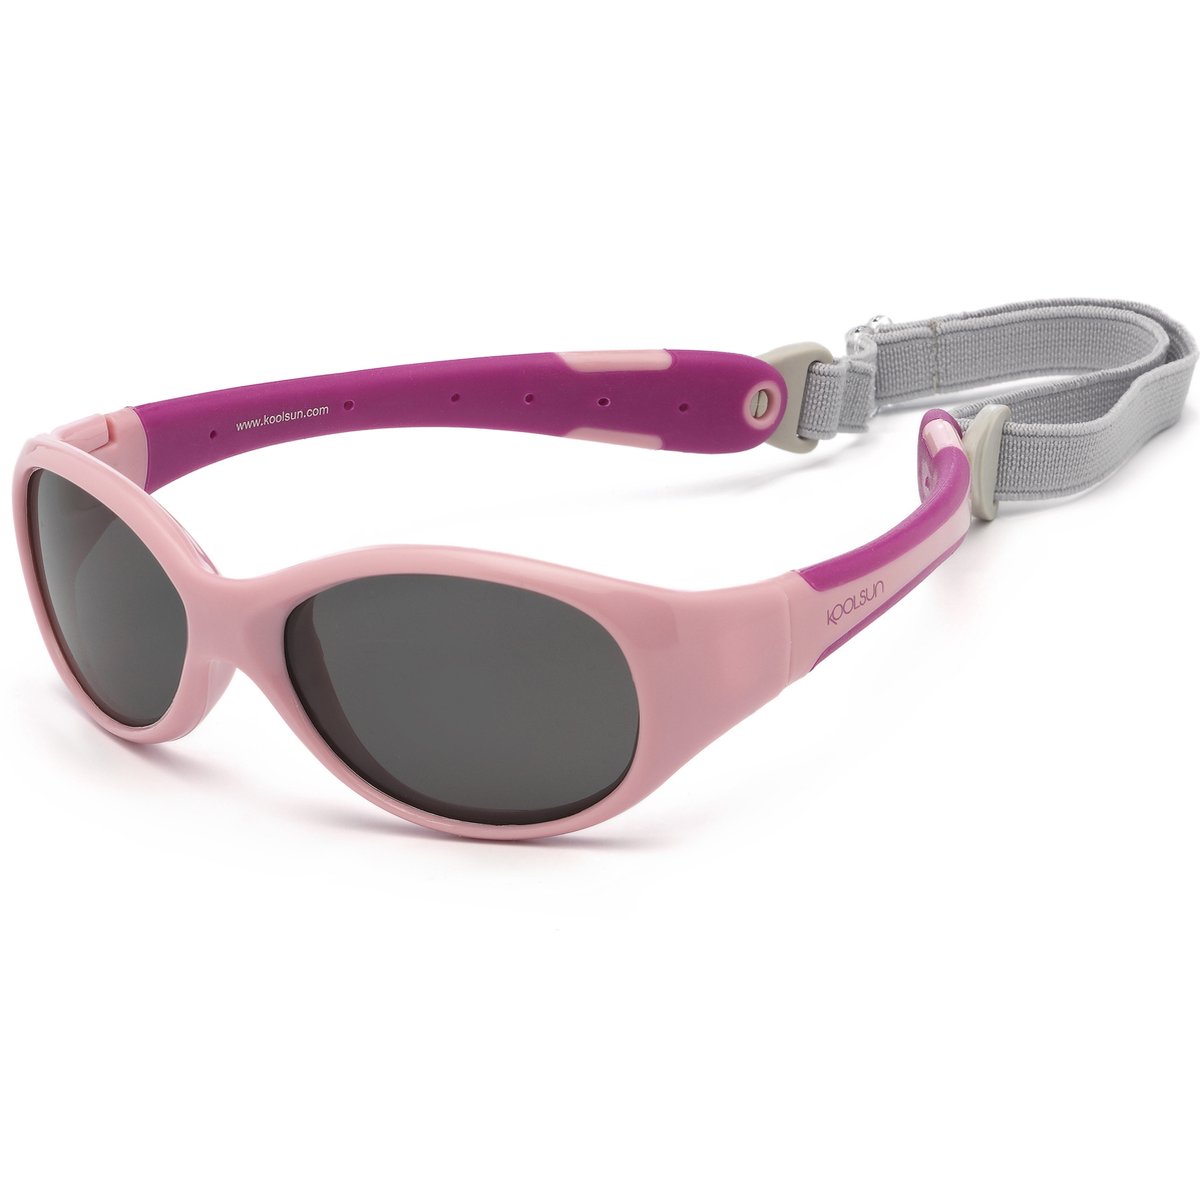 KOOLSUN® Flex - kinder zonnebril - Roze Sachet Orchid - 3-6 jaar - UV400 Categorie 3